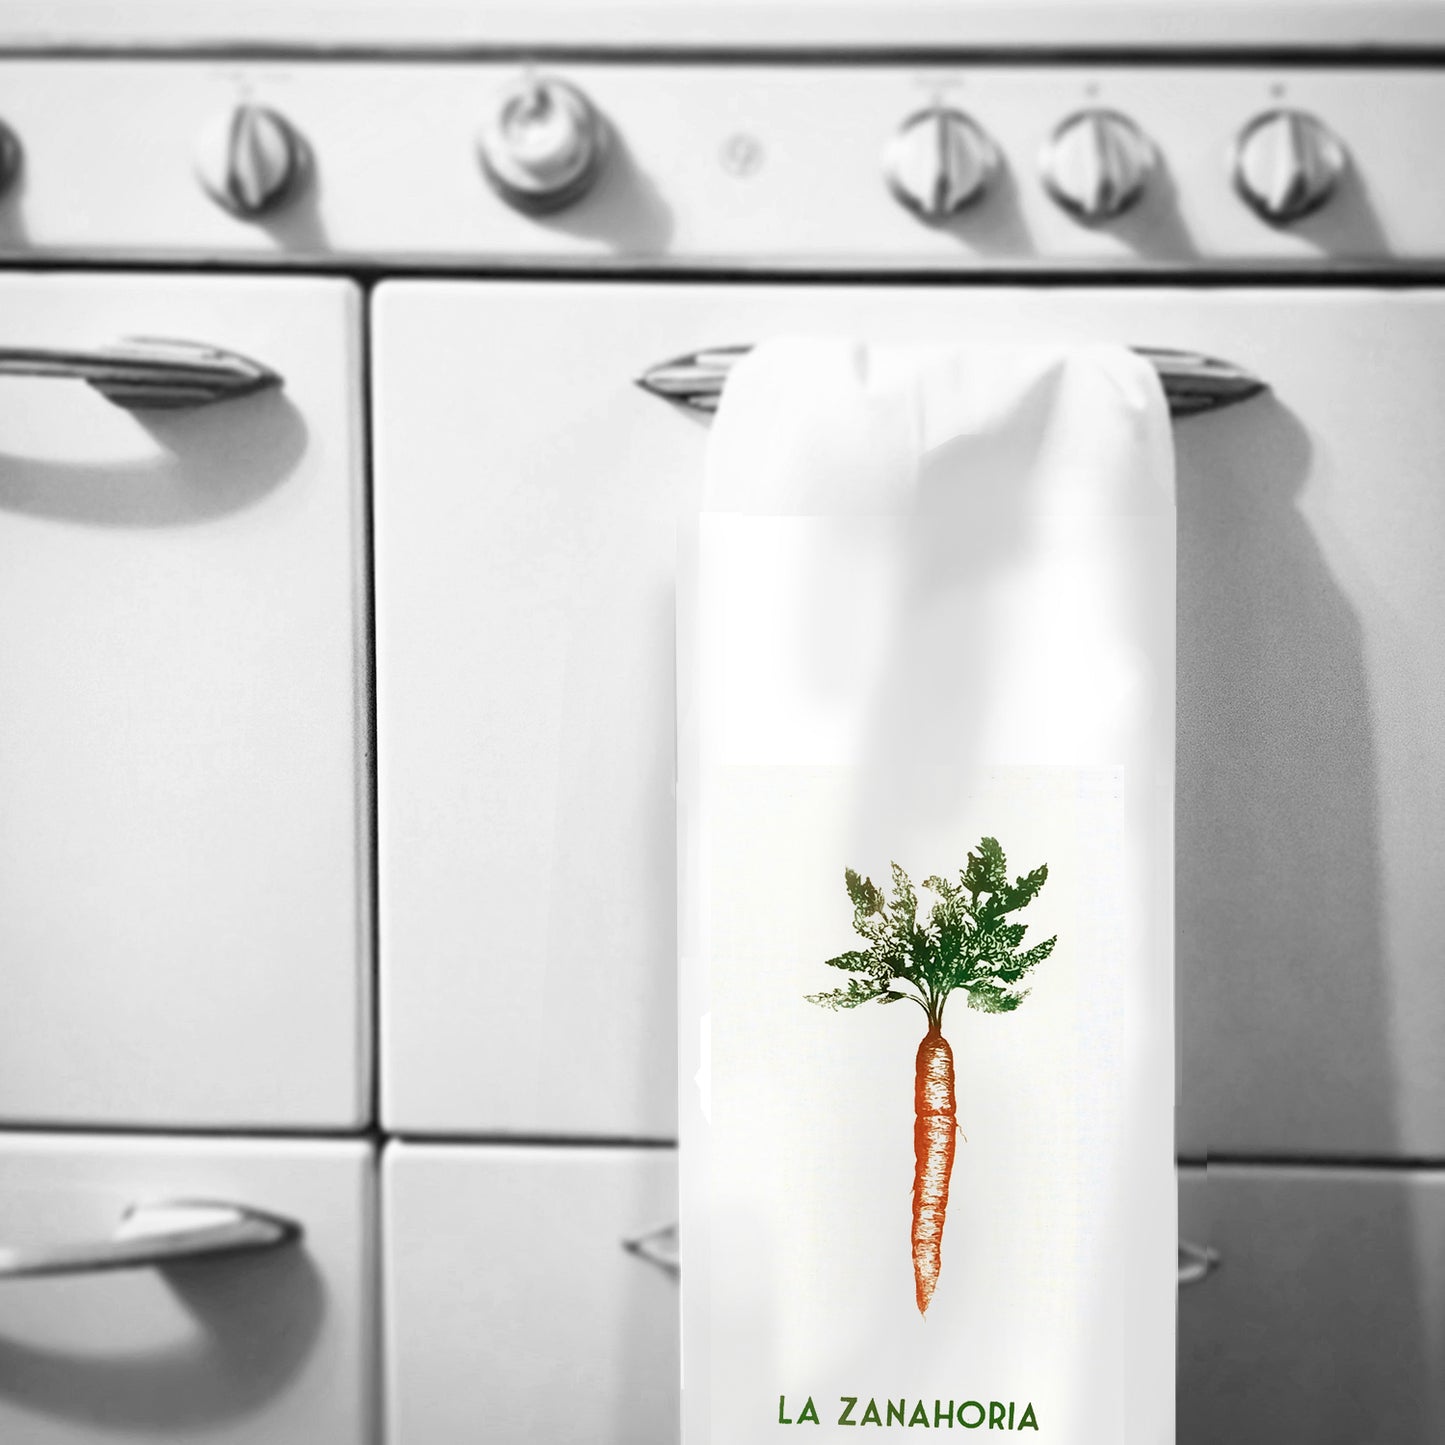 La Carotte Towel - Carrot